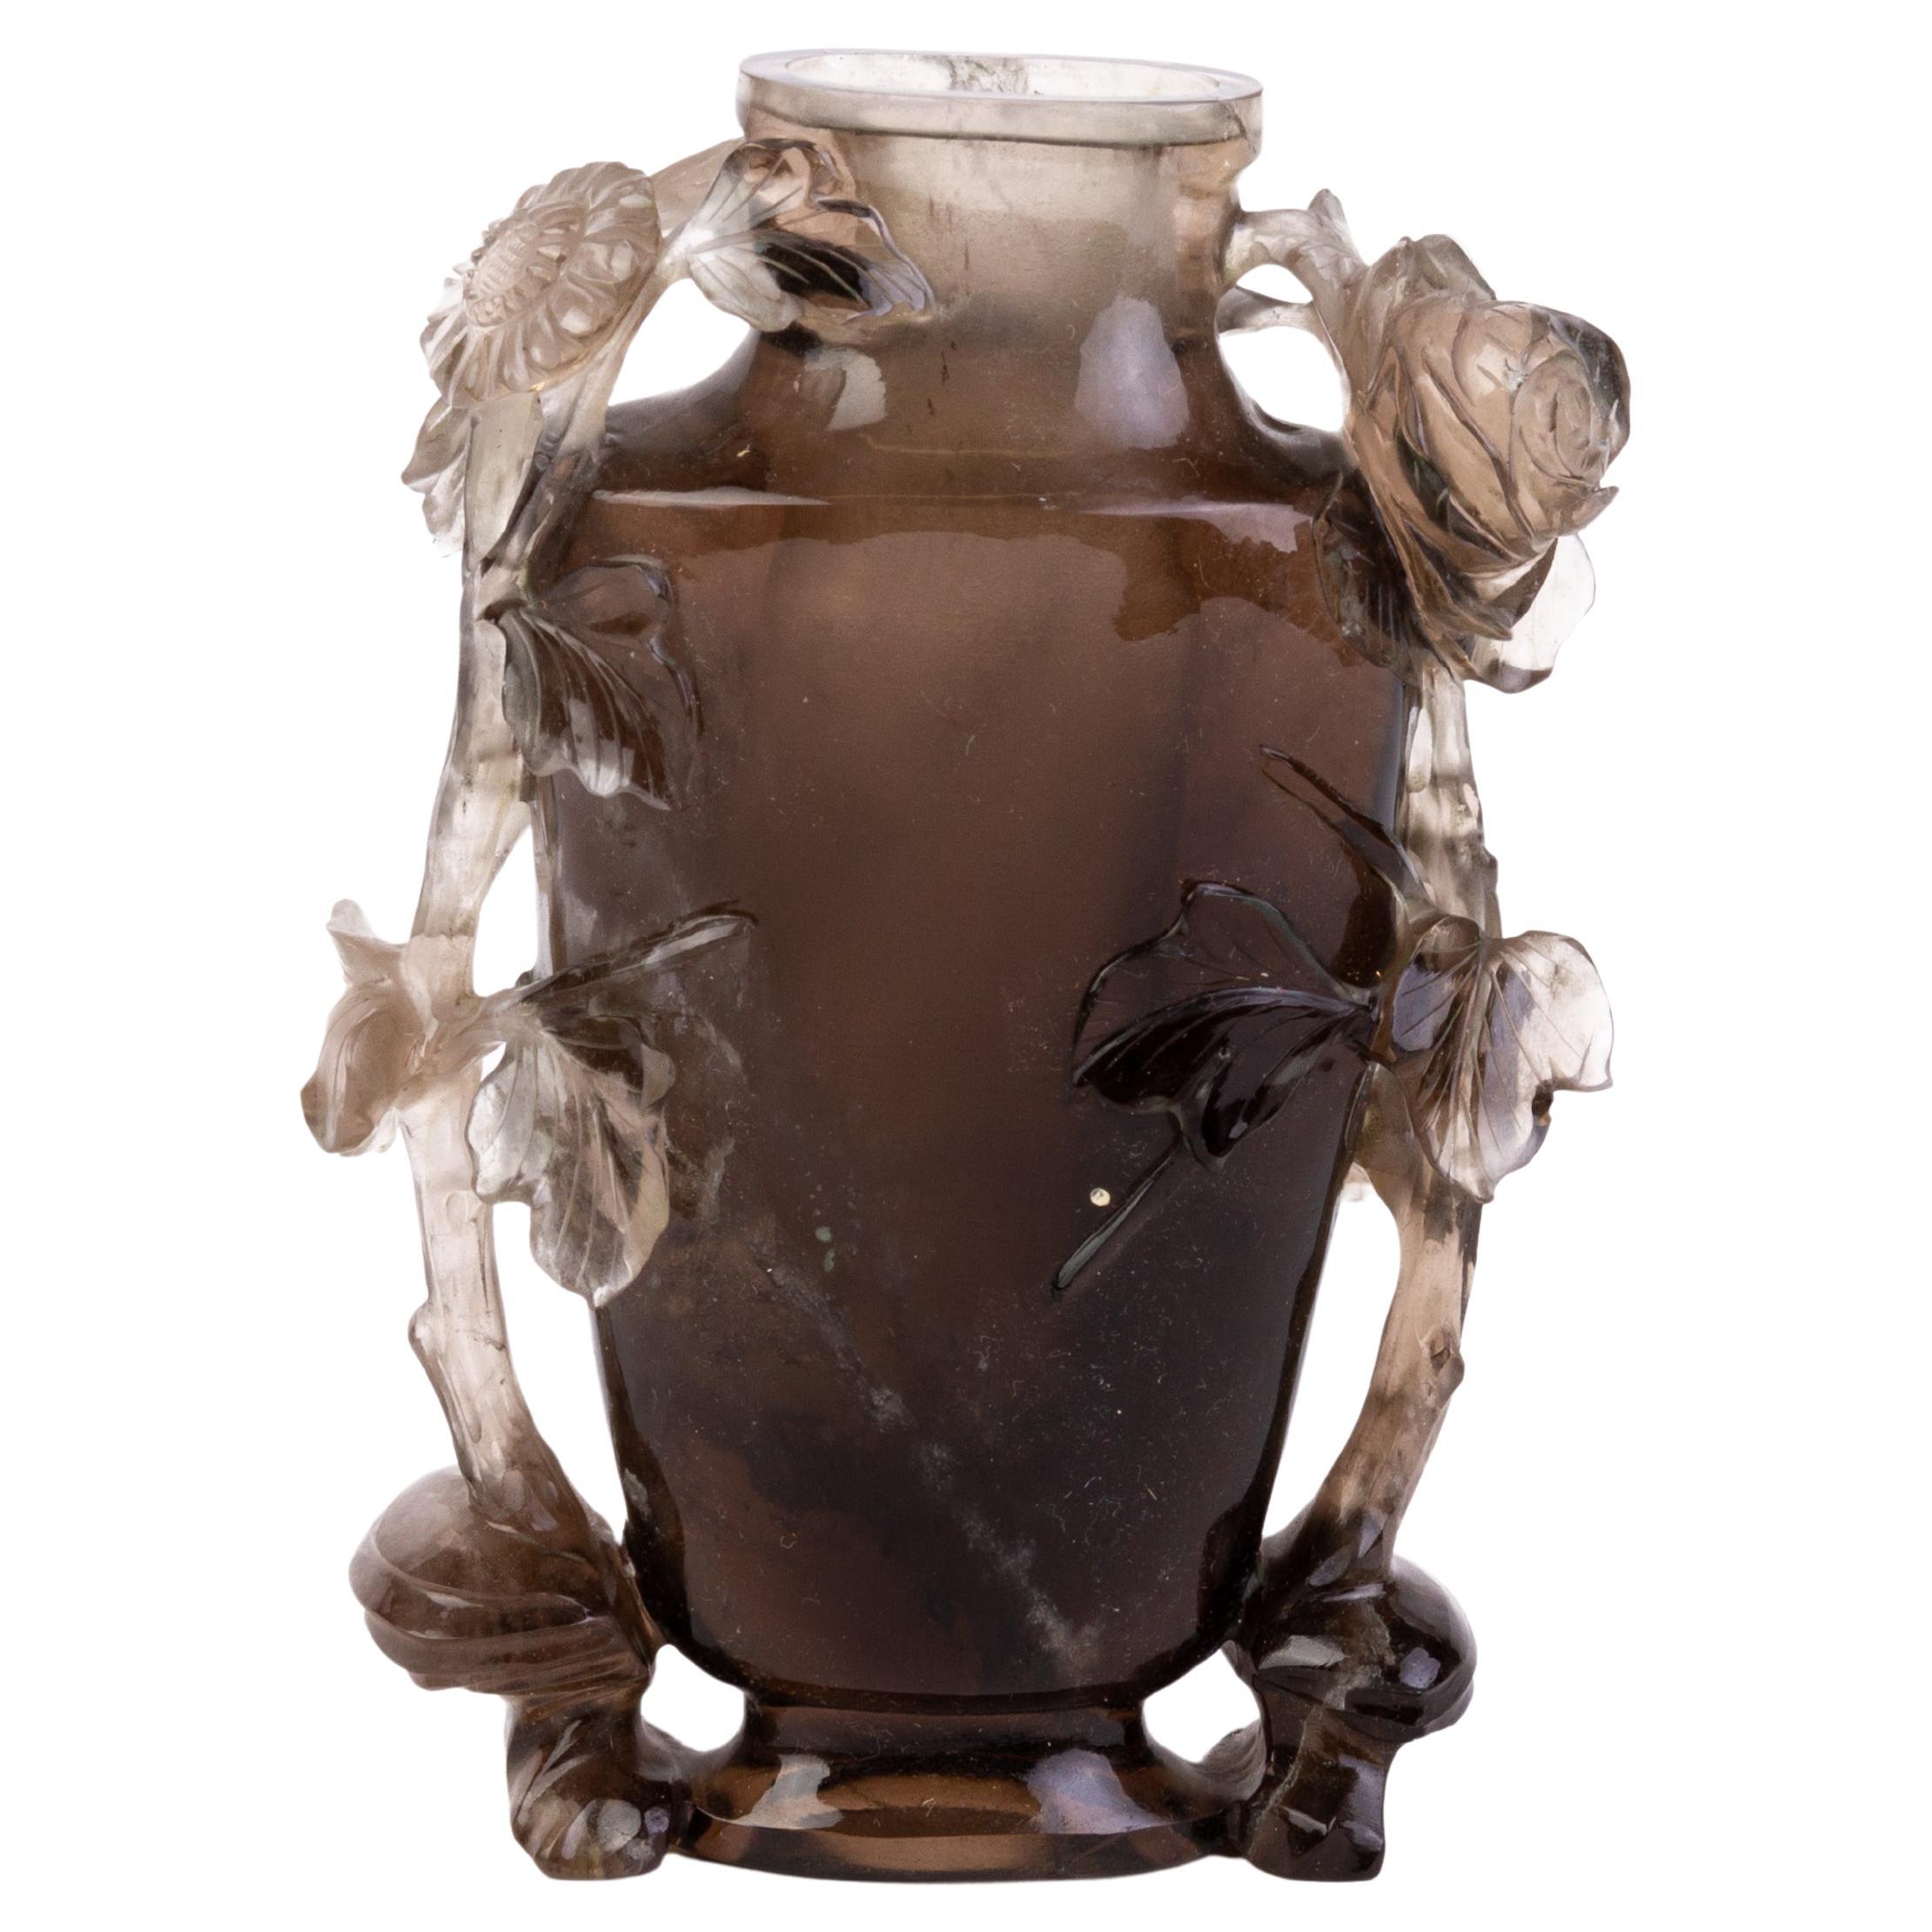 Chinese Qing Dynasty Carved Smoky Quartz Vase 19th Century